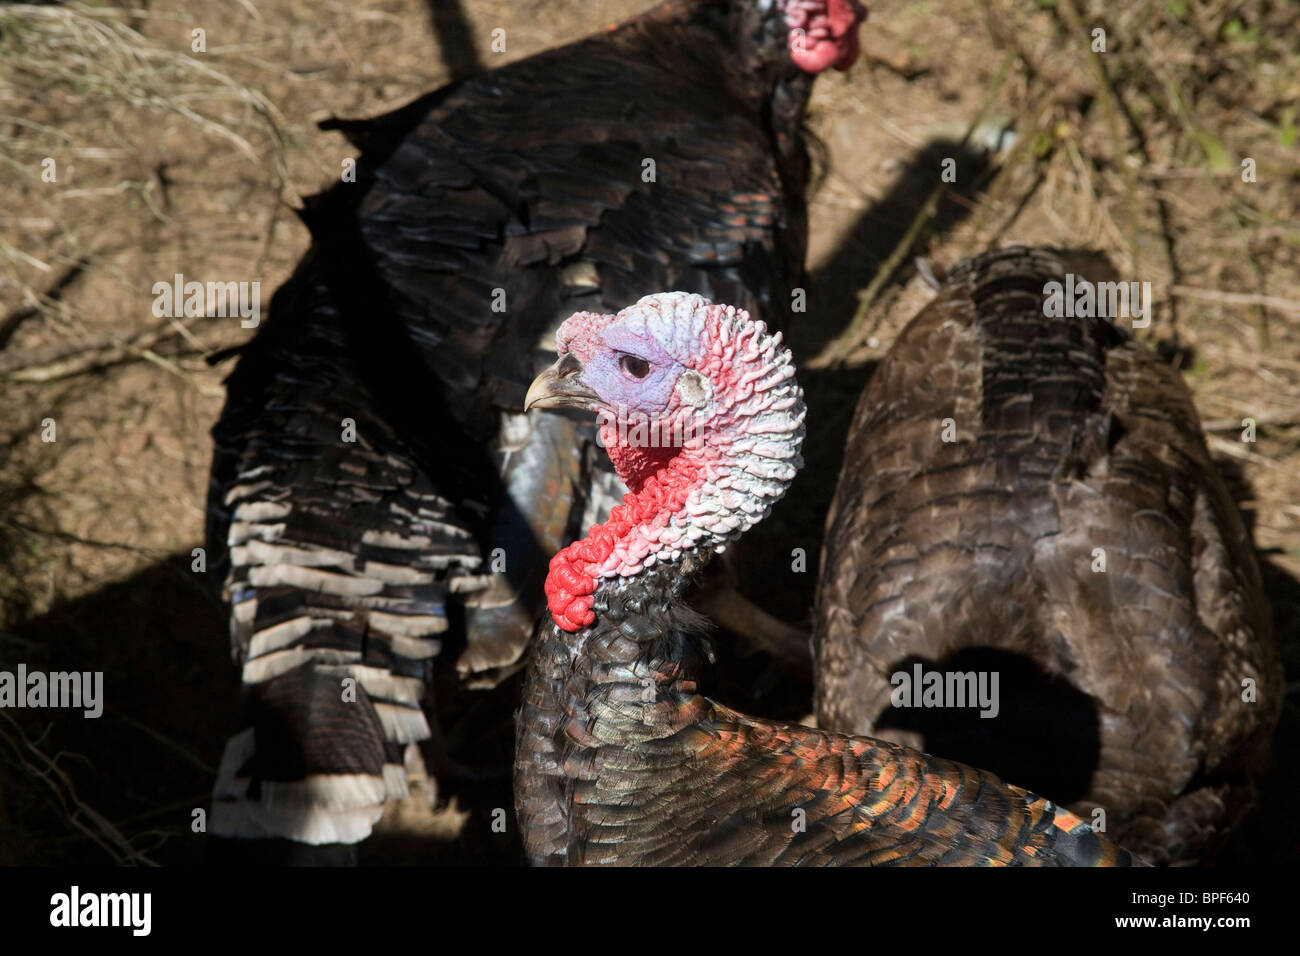 Turkey at Animal Pet Centre or farm   Christmas Dinner Stock Photo